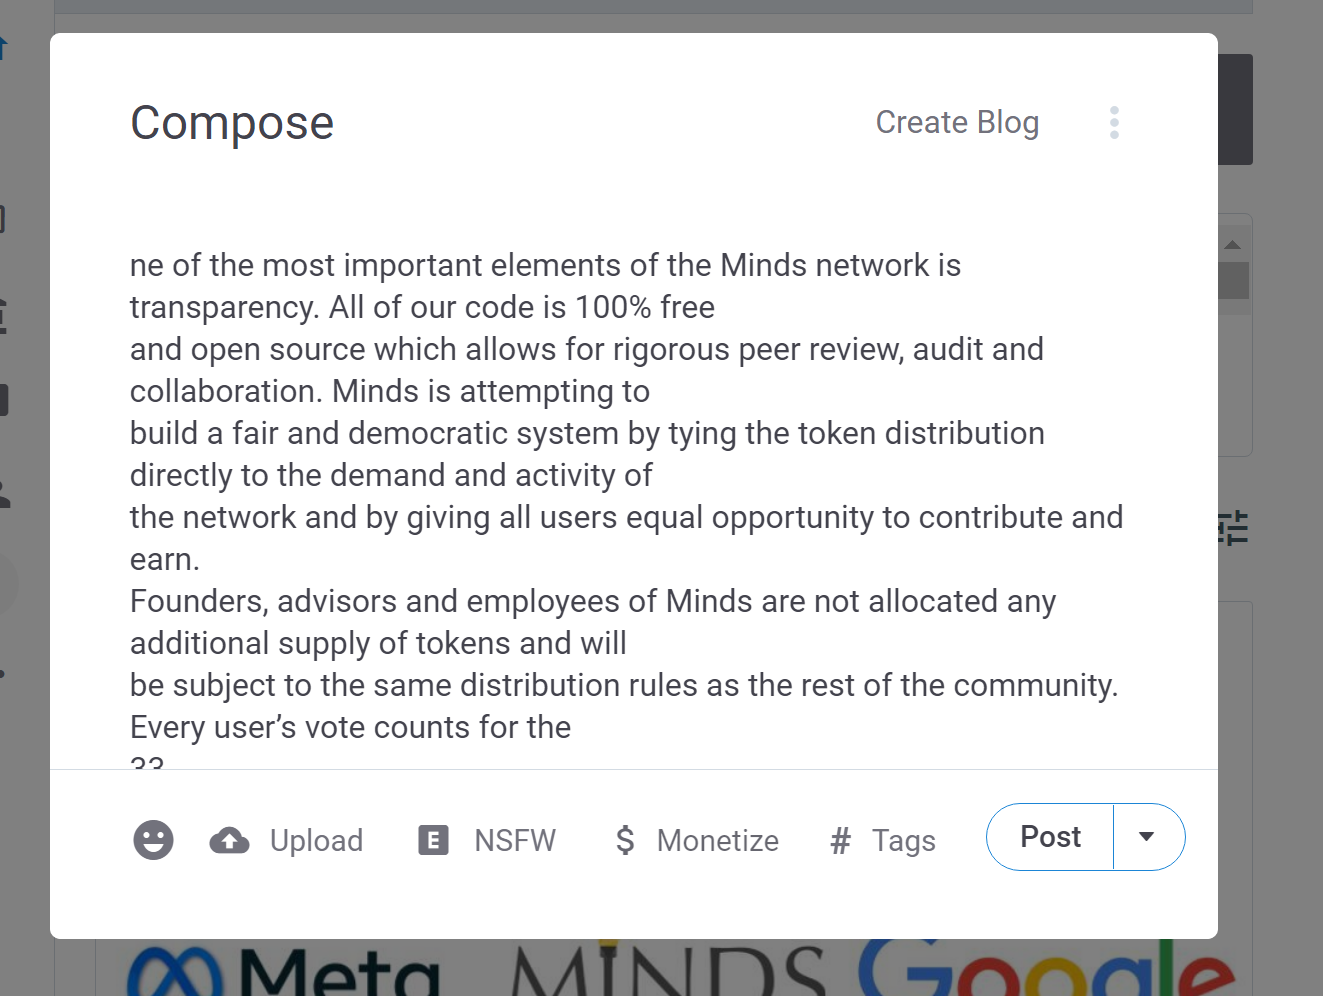 Minds social network has a familiar compose feature